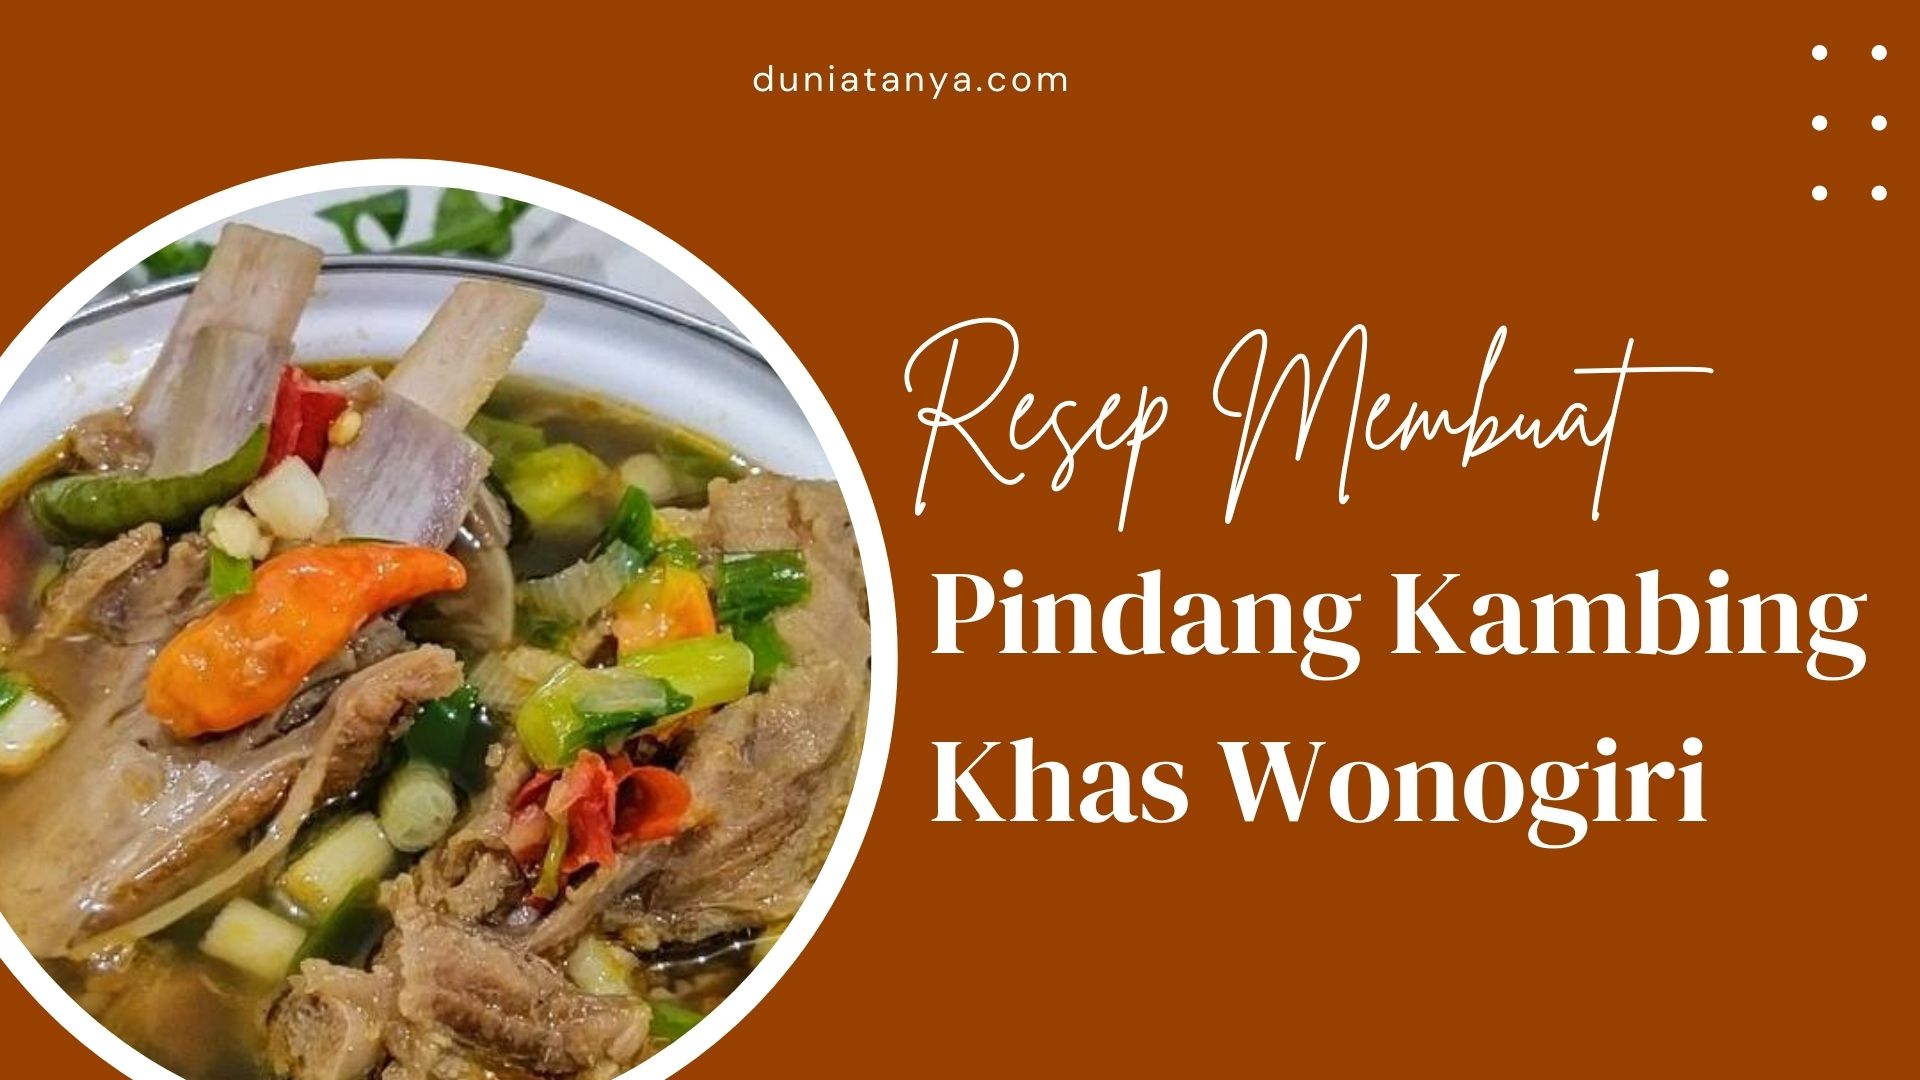 You are currently viewing Resep Membuat Pindang Kambing Khas Wonogiri